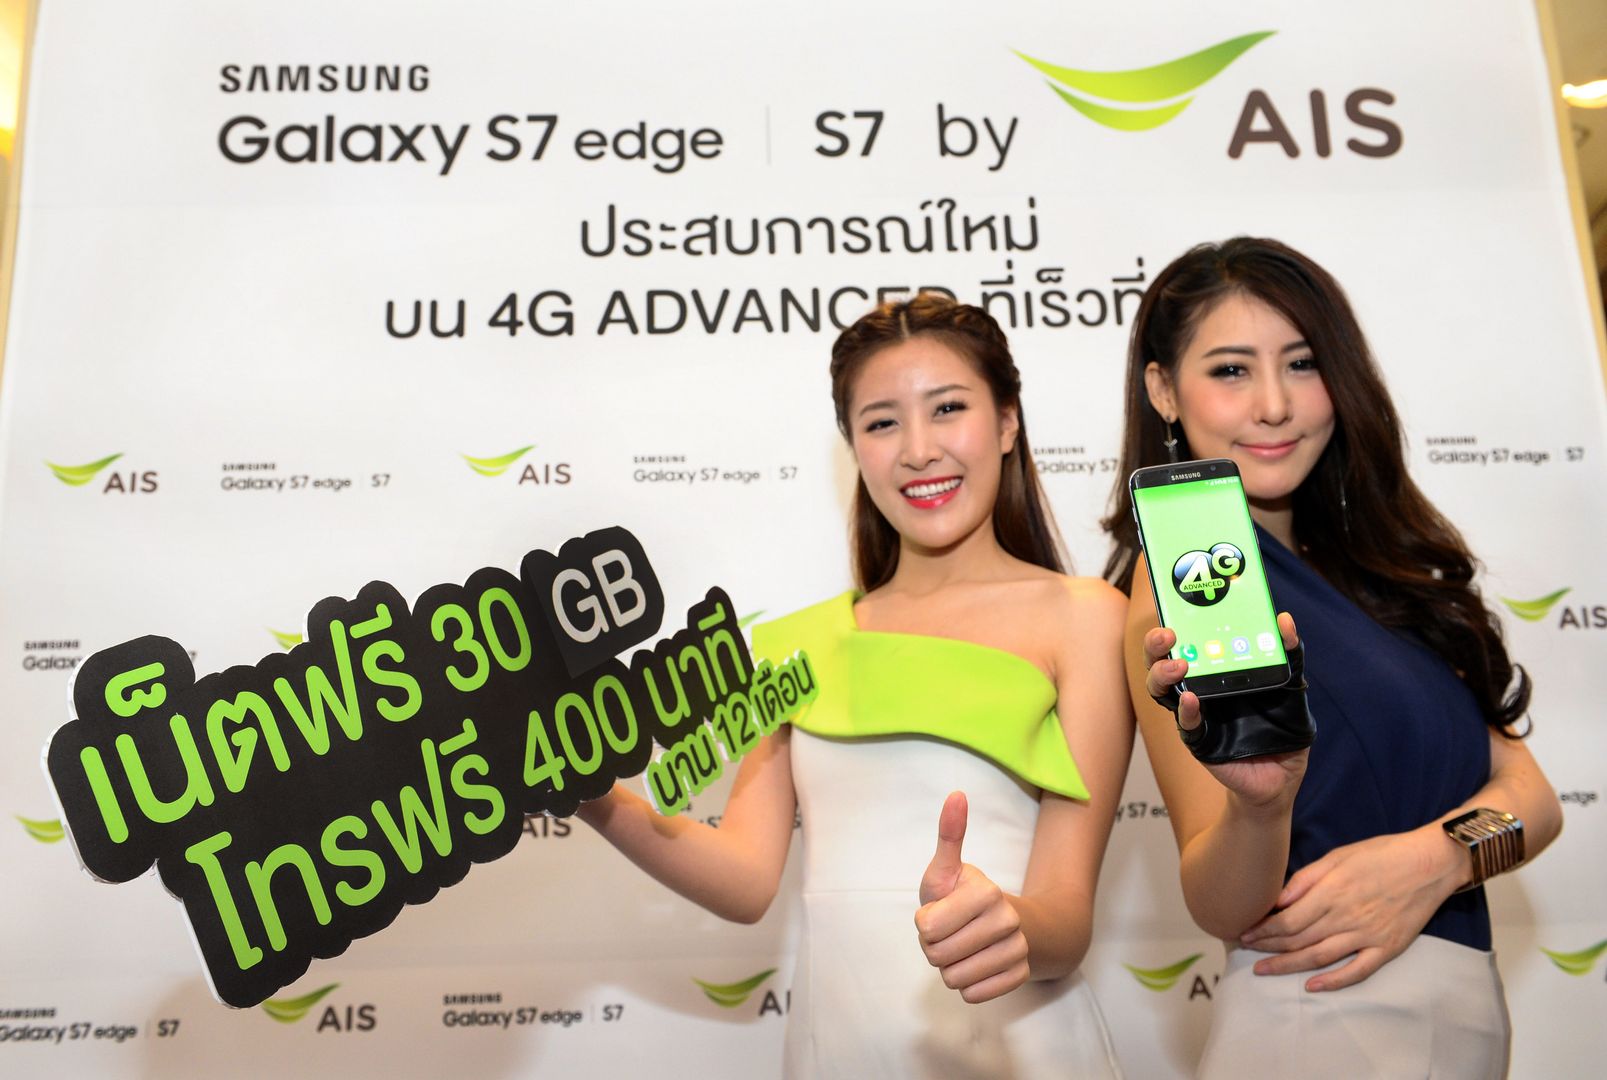 AIS เปิดโปรแรง จ่าย 5,000 รับ Galaxy S7 จ่ายบิลครบปีรับ Galaxy S8 ต่อเลย